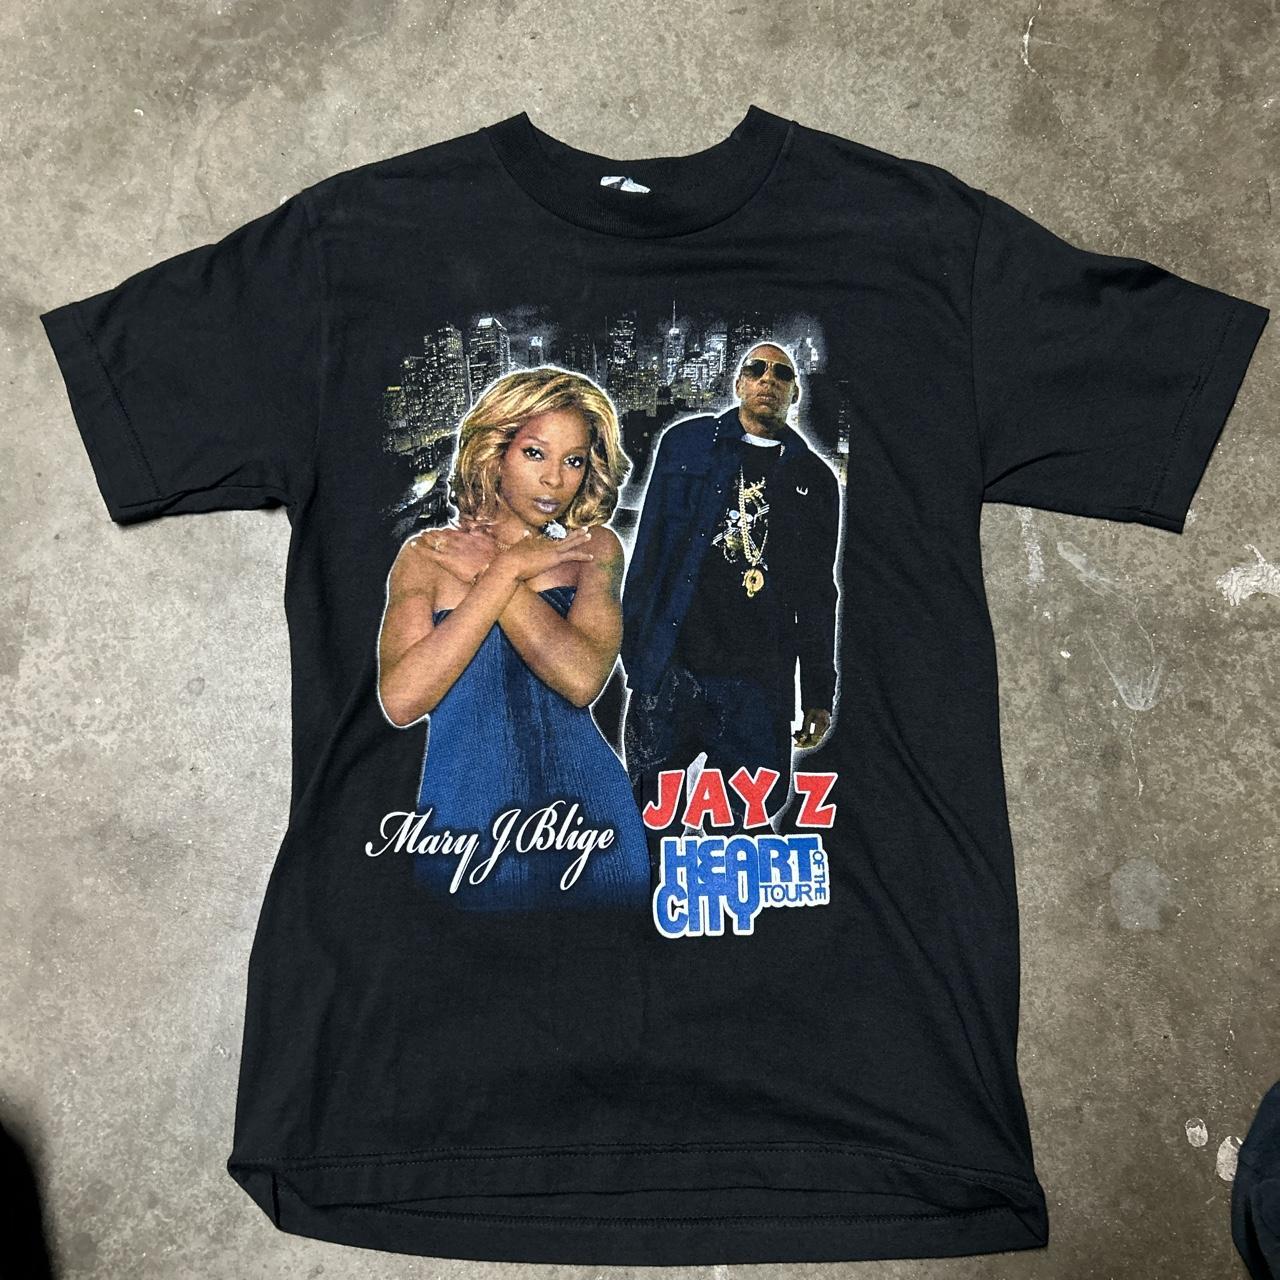 2008 Heart of the city tour tee, Jay Z x Mary J Blige...